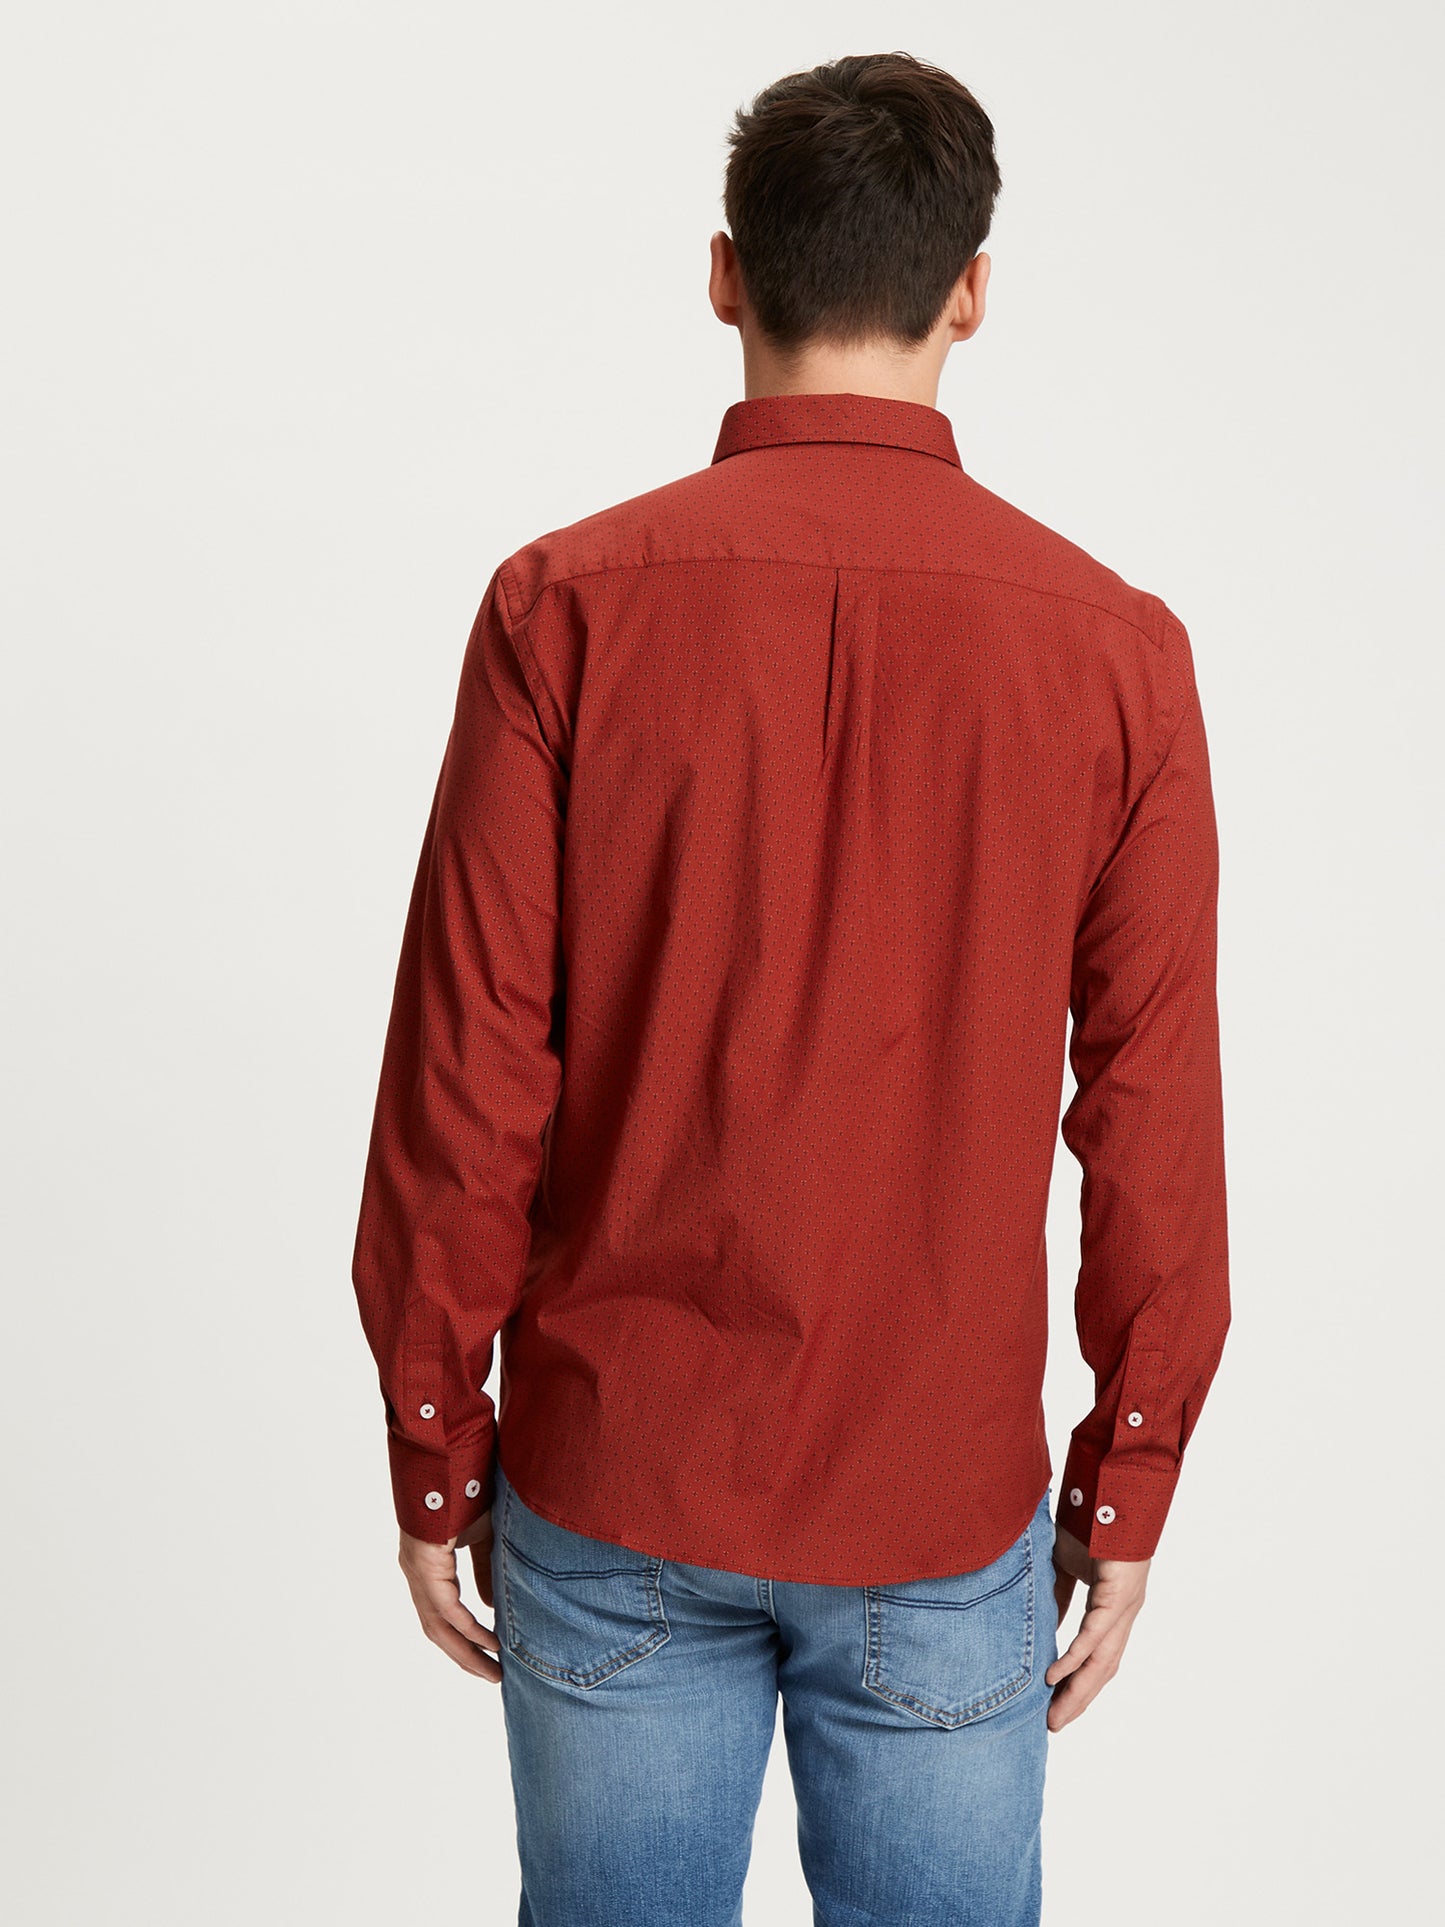 Men's regular long-sleeved shirt minimal pattern burgundy red